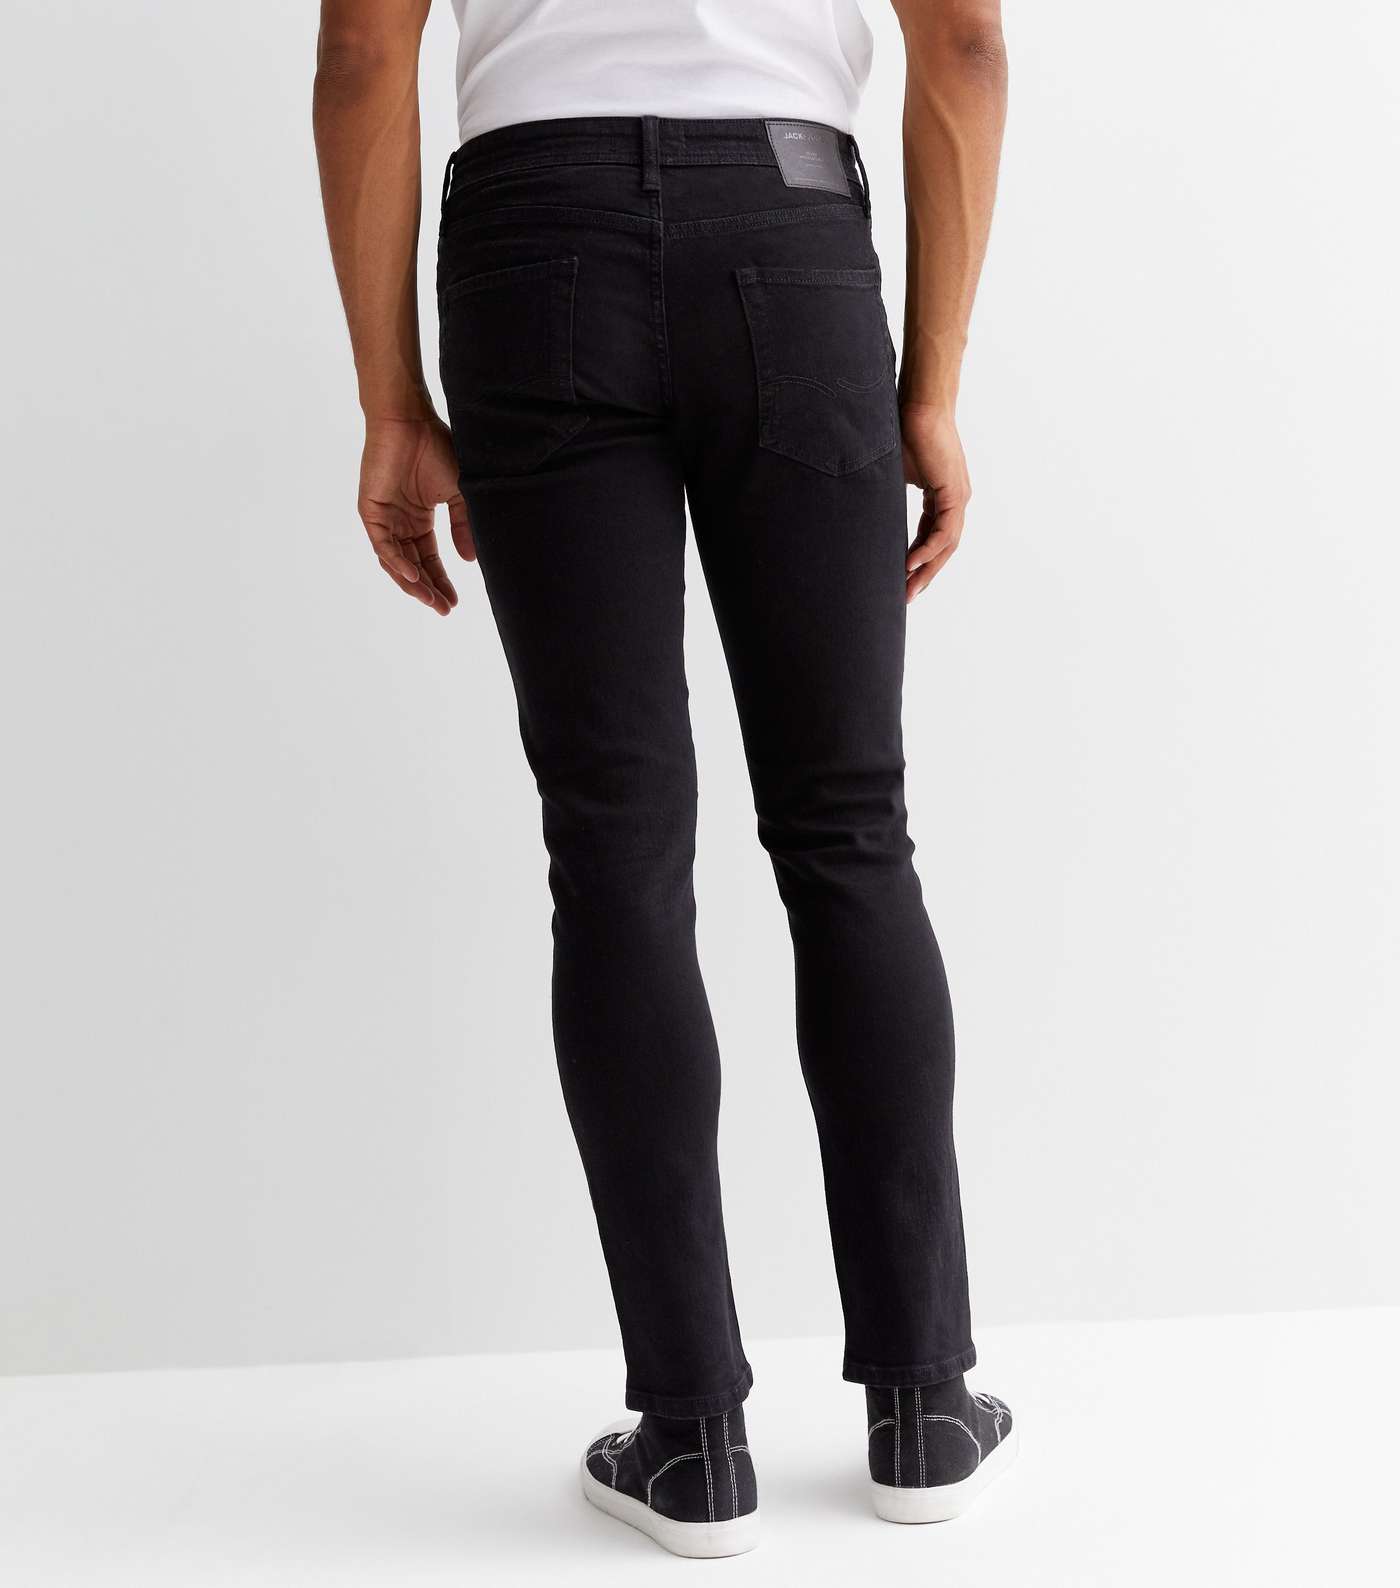 Jack & Jones Black Slim Fit Jeans Image 4